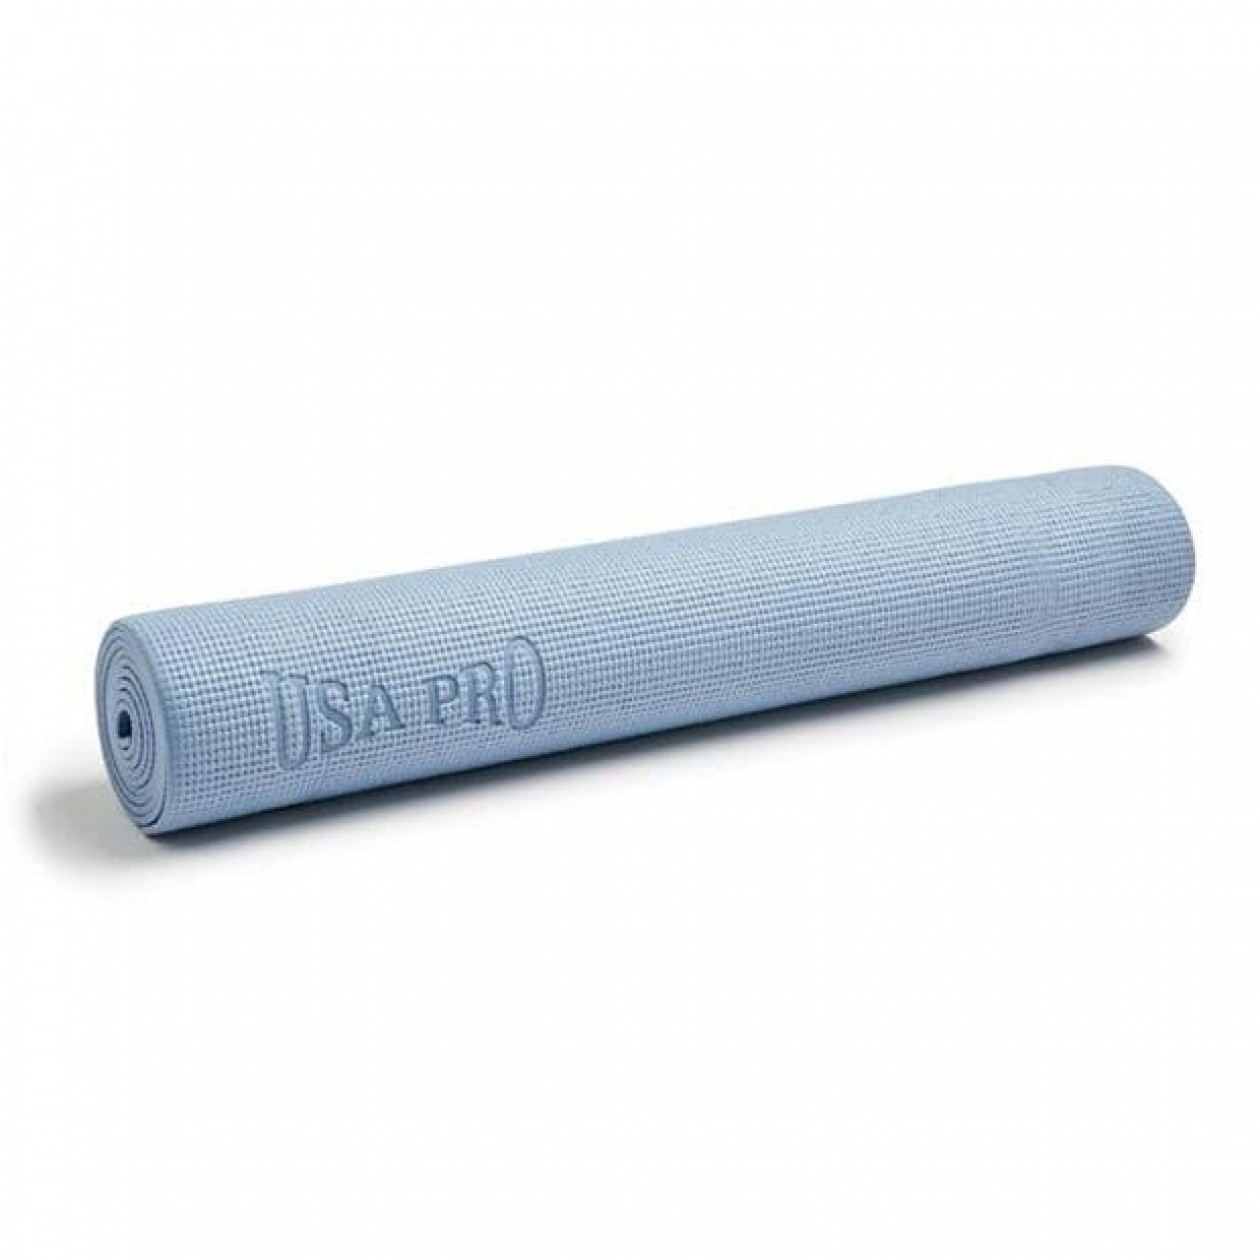 USA Pro Yoga Mat Blue